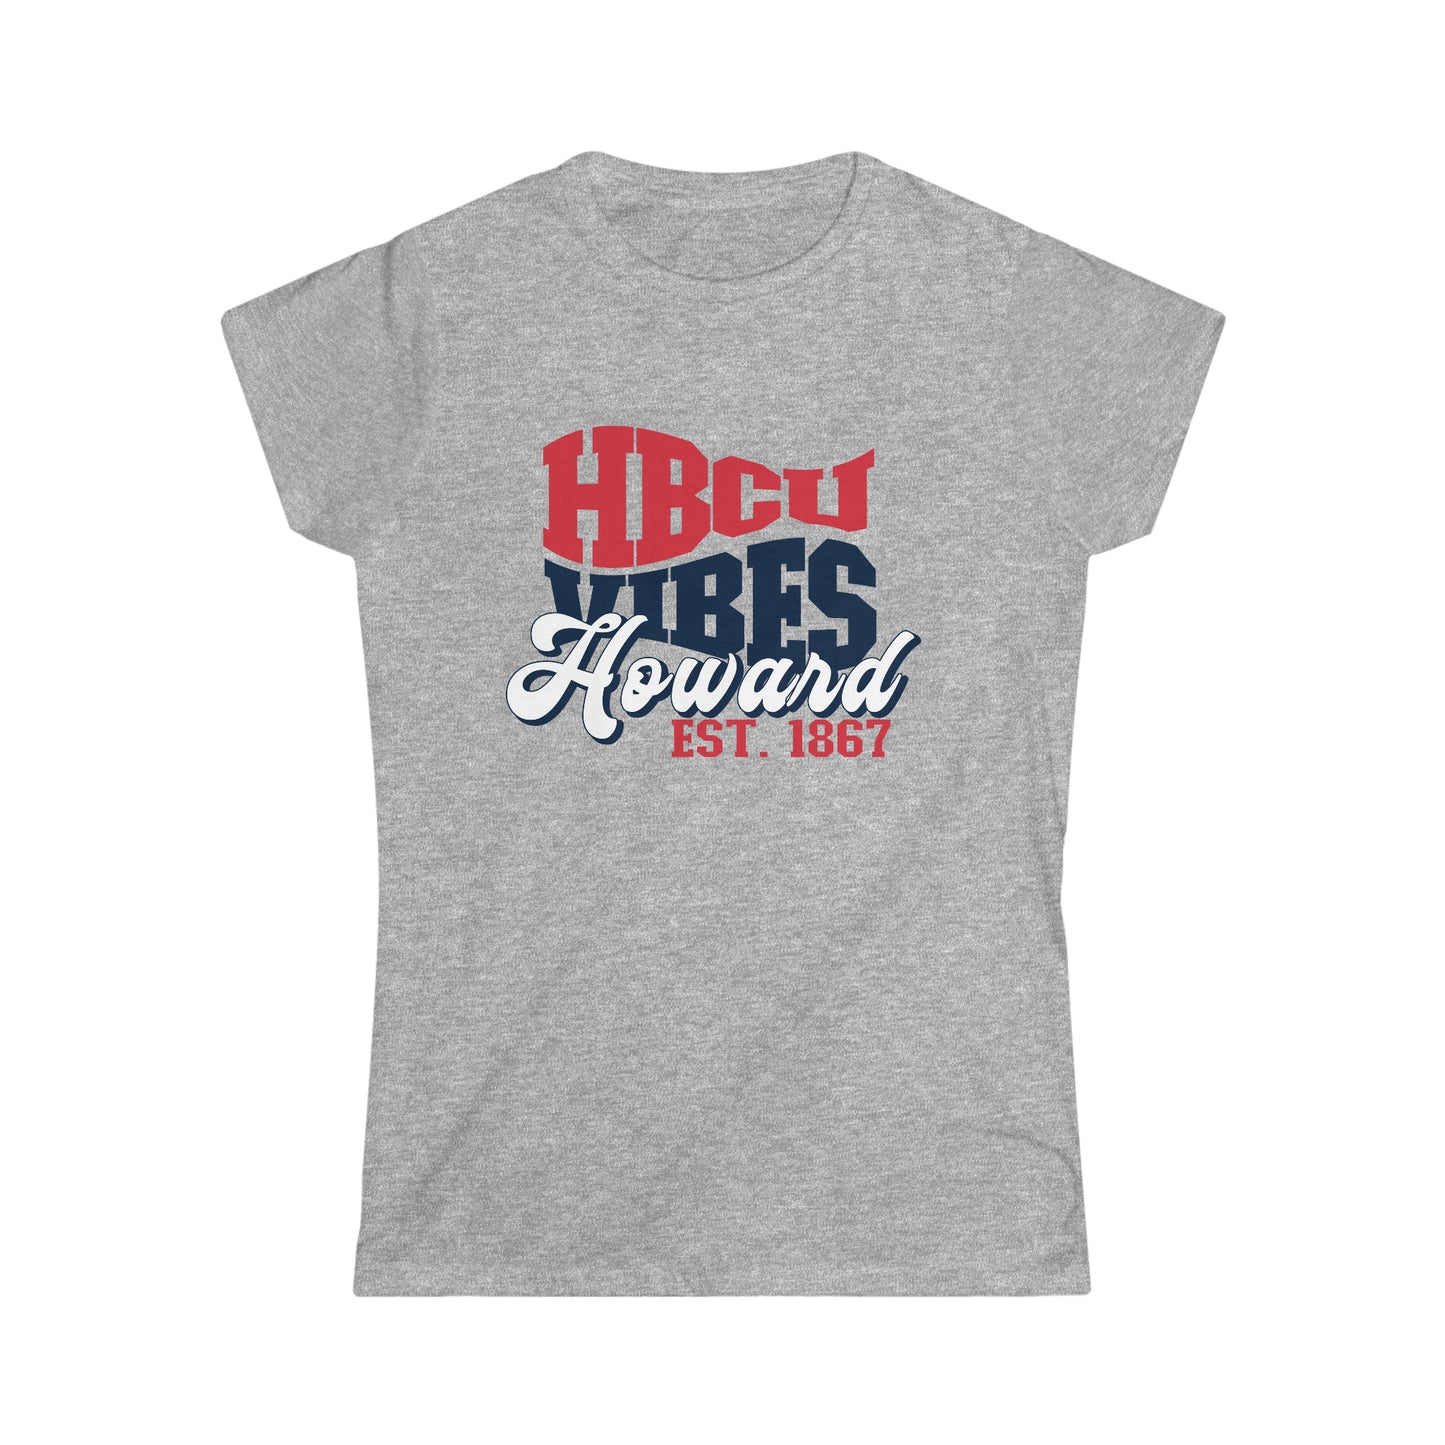 HBCU Love (Howard University/ HBCU Vibes Women's Softstyle Tee)